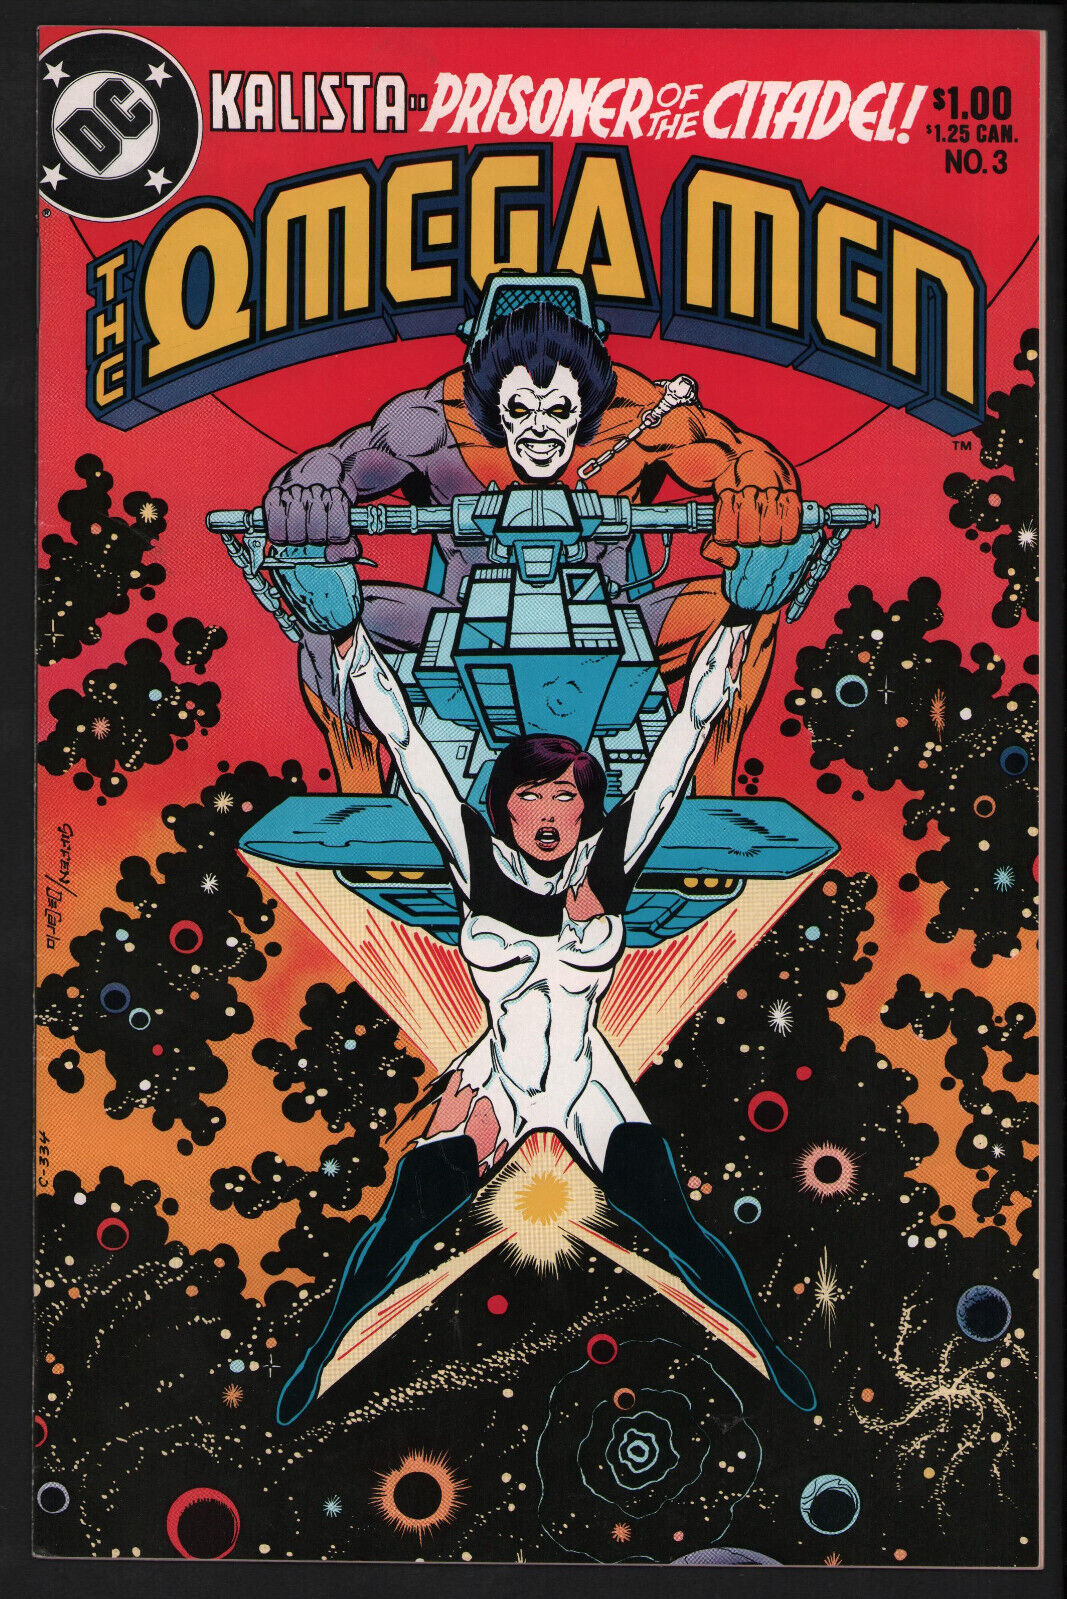 Omega Men #3 (9.2) Prisoner of The Citadel - 1983